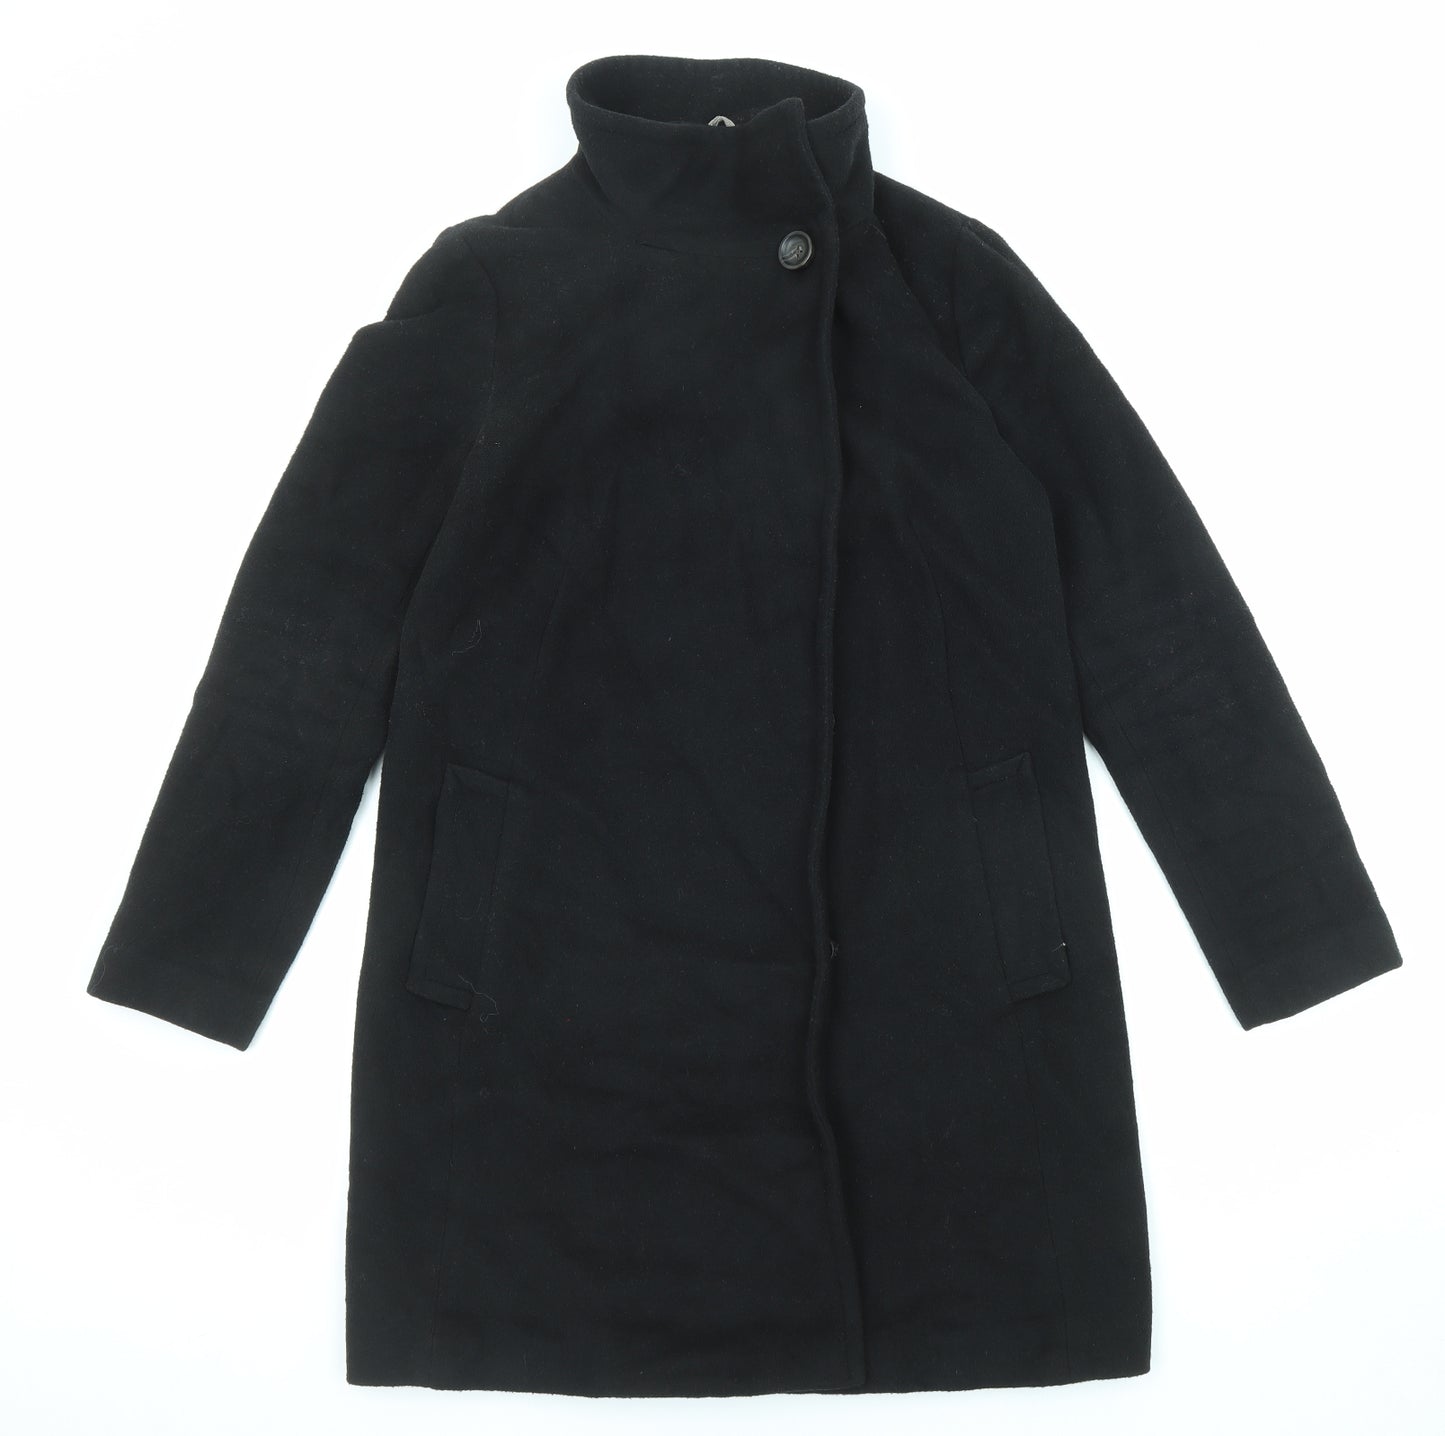 Gap Womens Black Overcoat Coat Size S Button